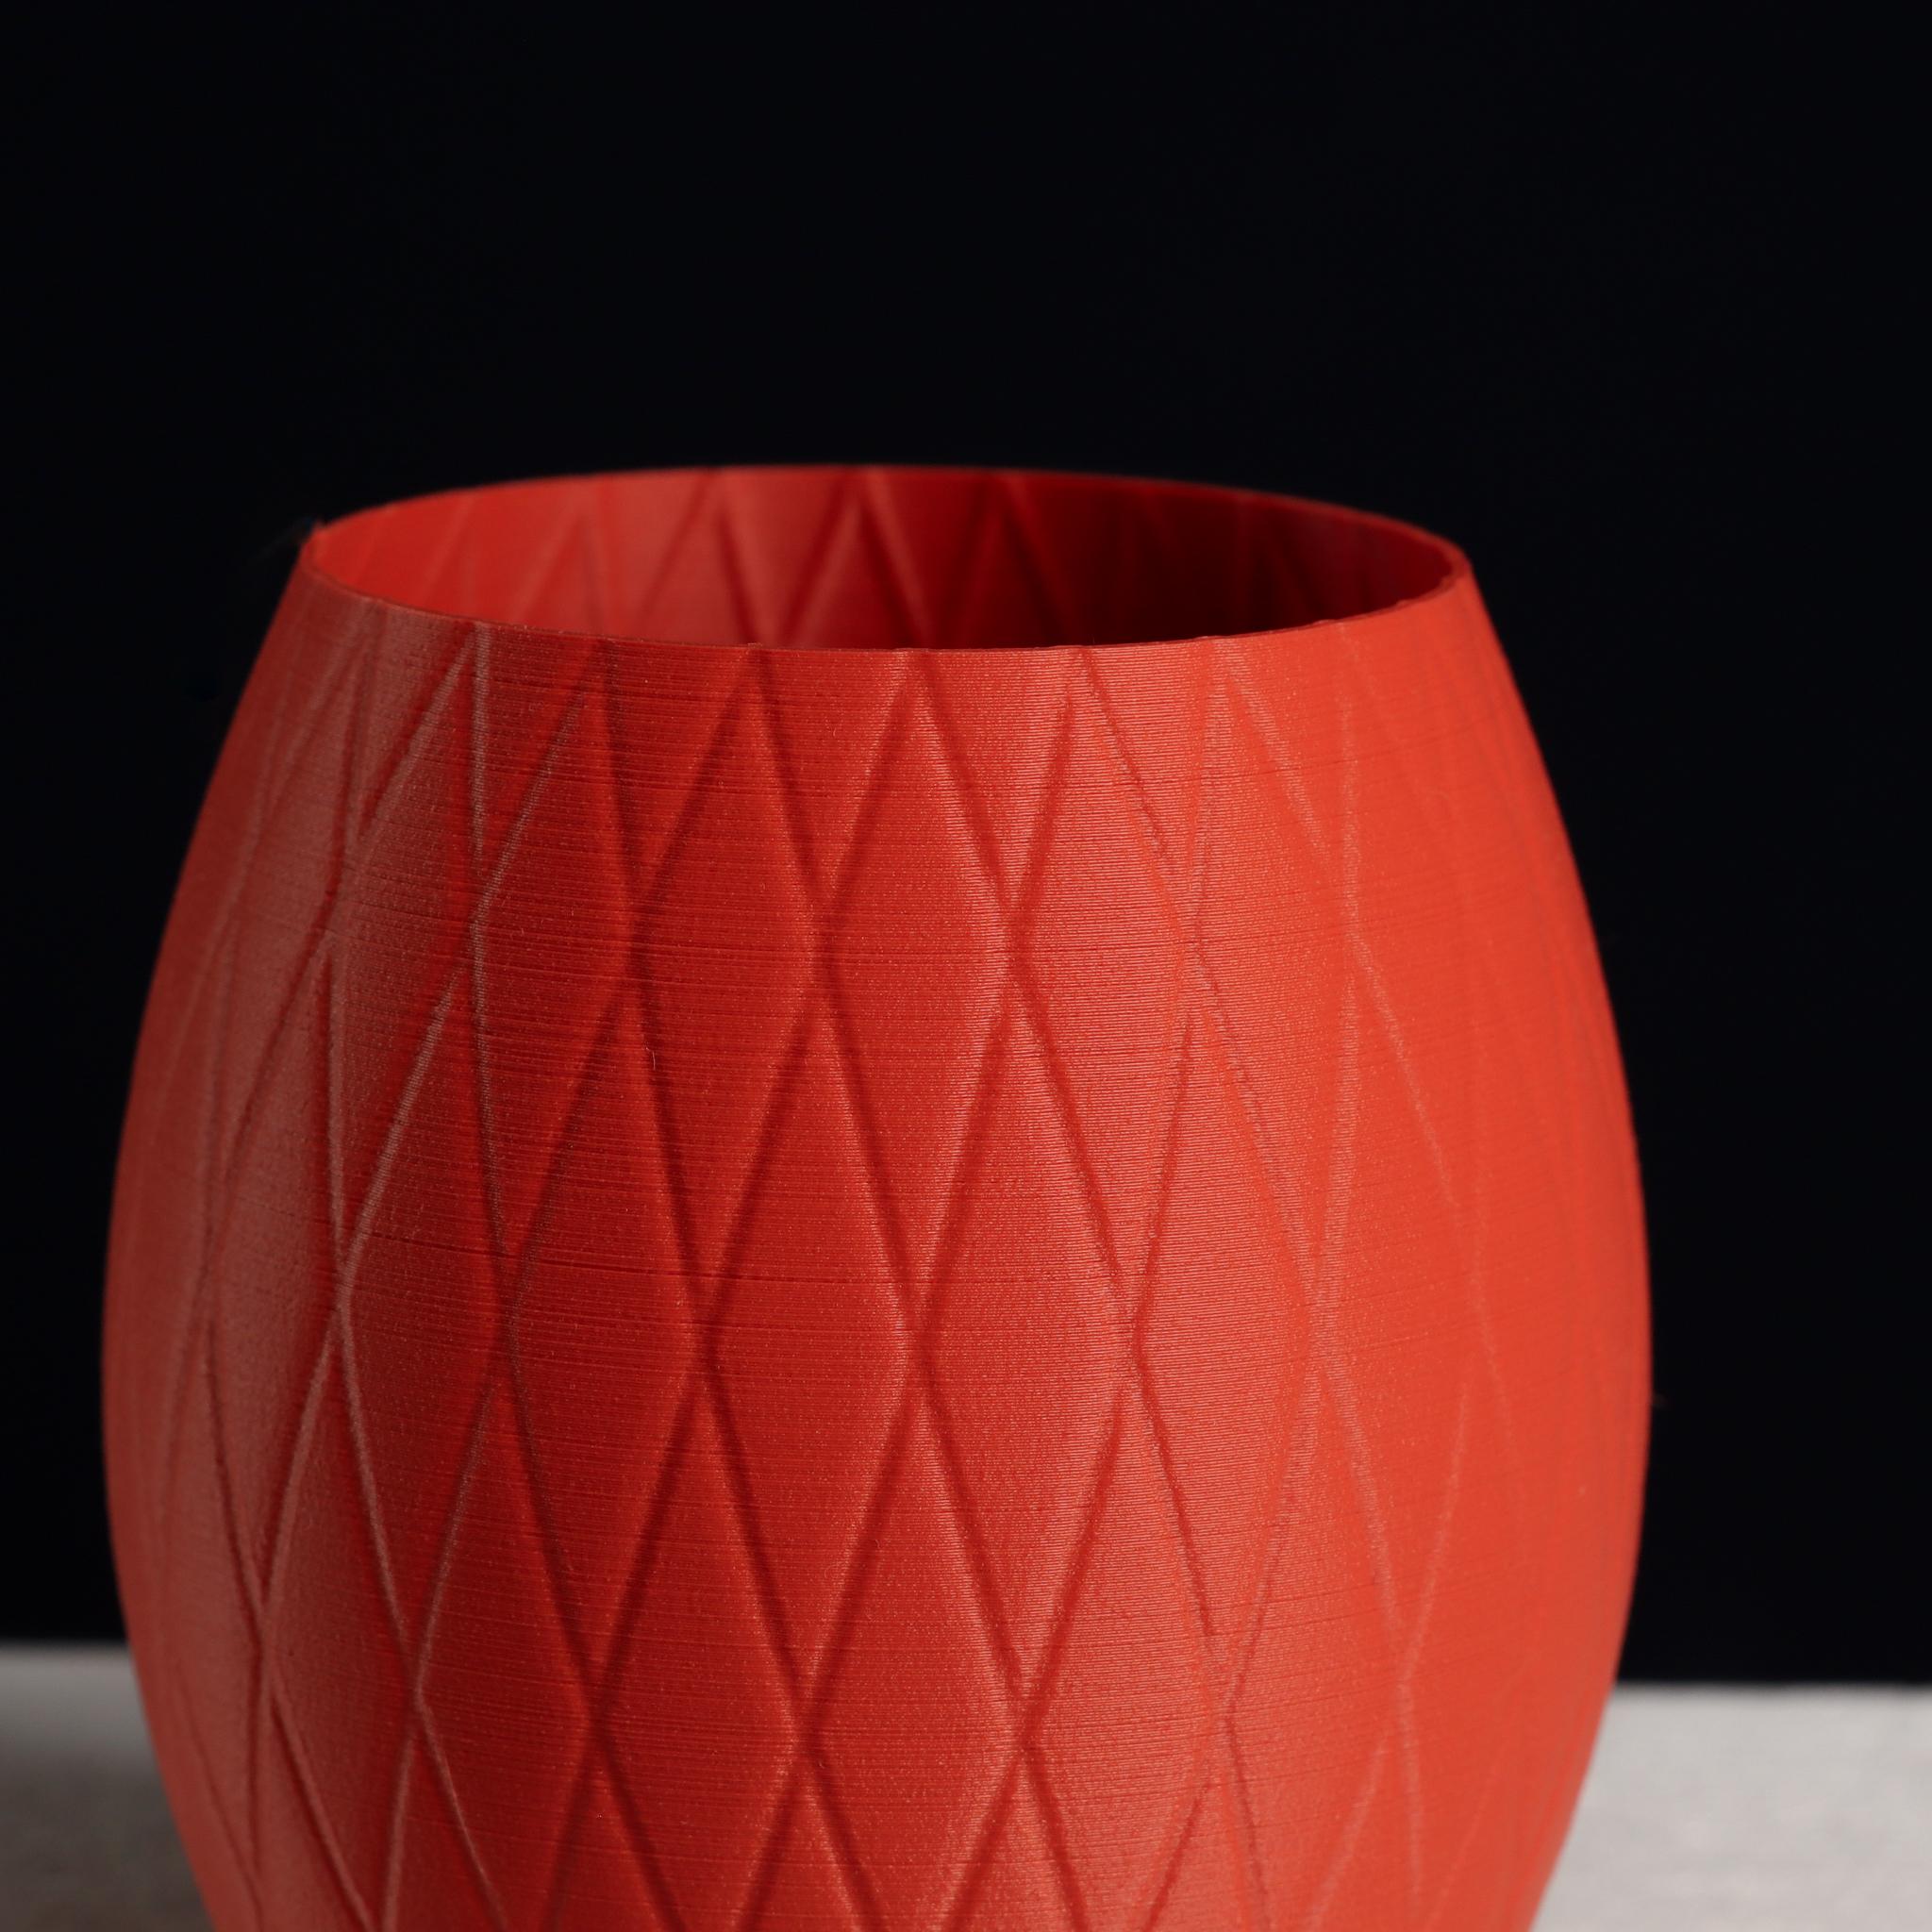  Knitted Pencil Holder (vase mode)  3d model